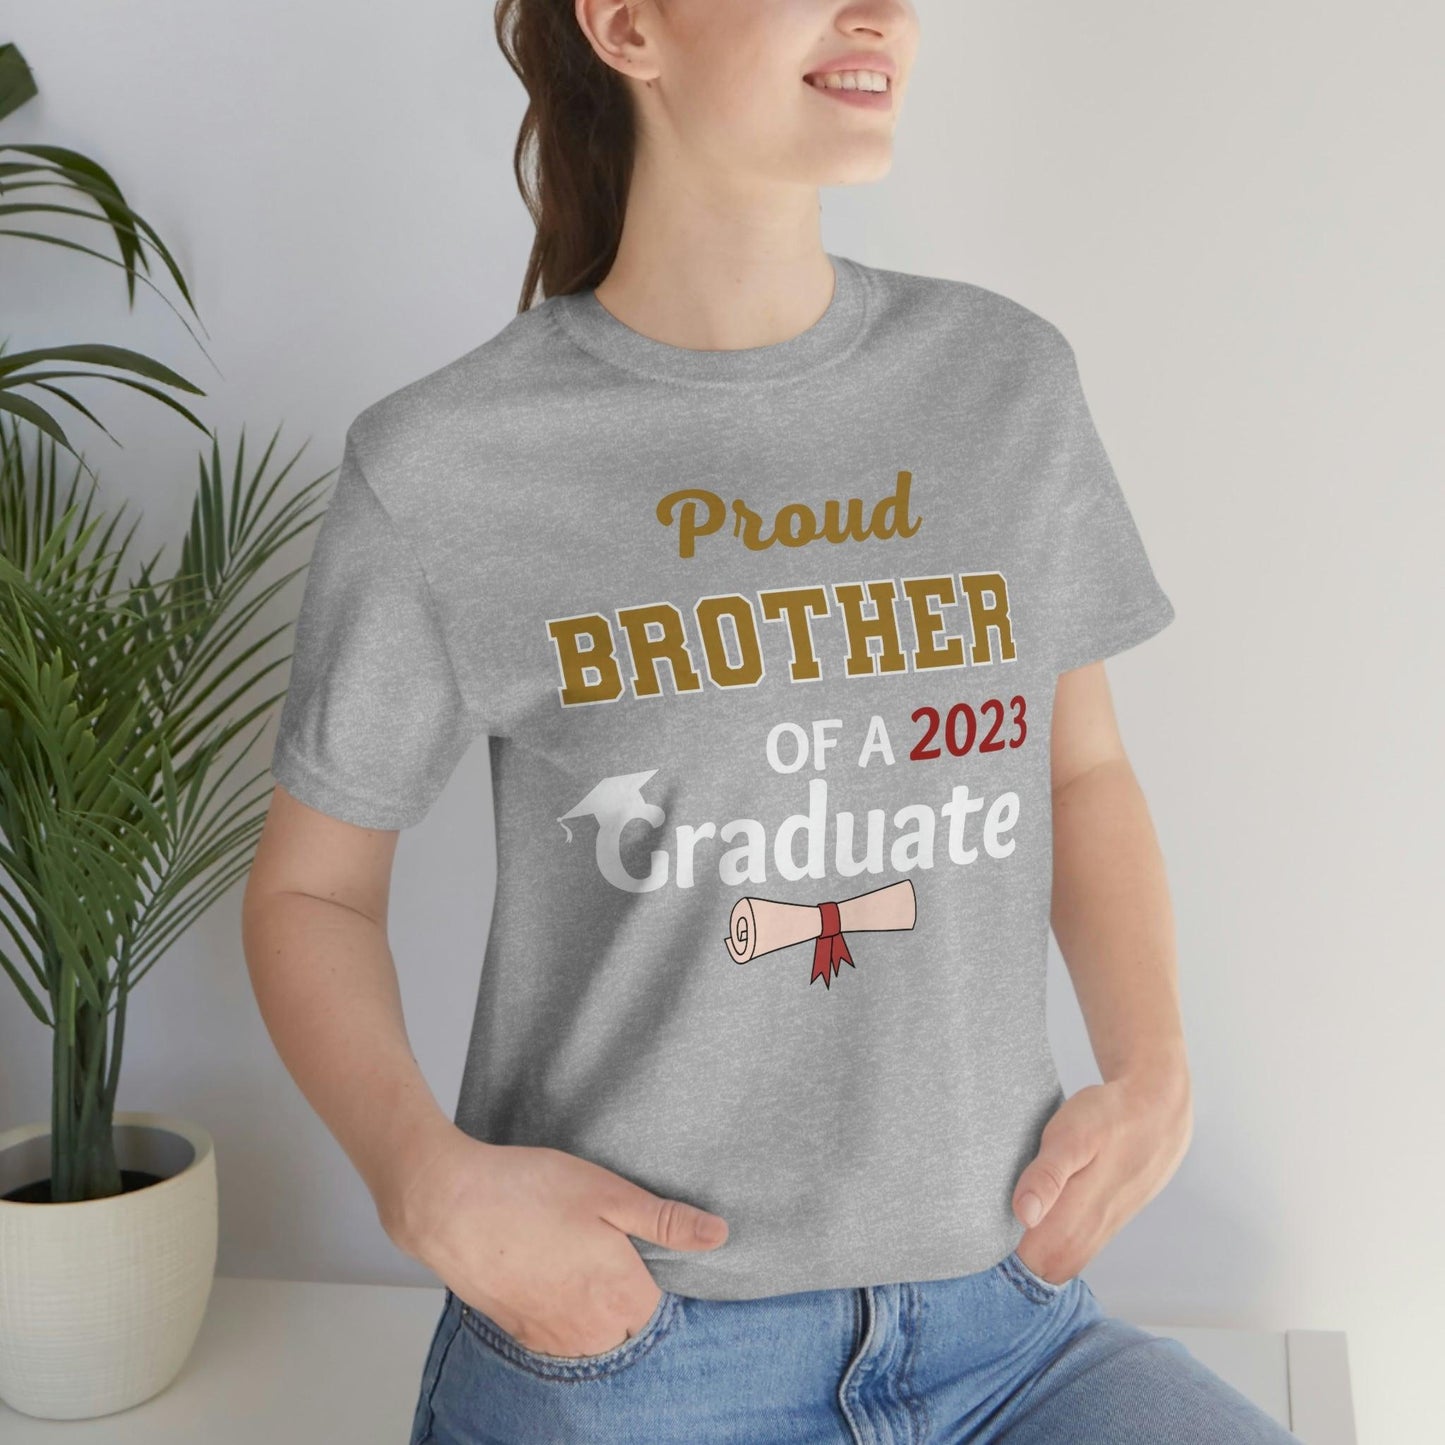 Proud Brother of a Graduate shirt - Graduation shirt - Graduation gift